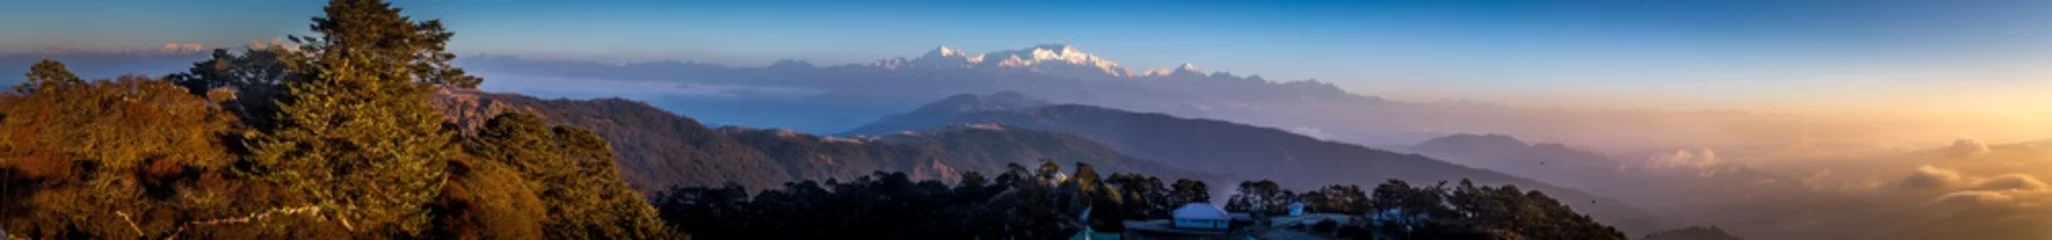 Velvet curtains Makalu Kanchenjunga and Everest in a single frame, Sandakphu,West Bengal, india